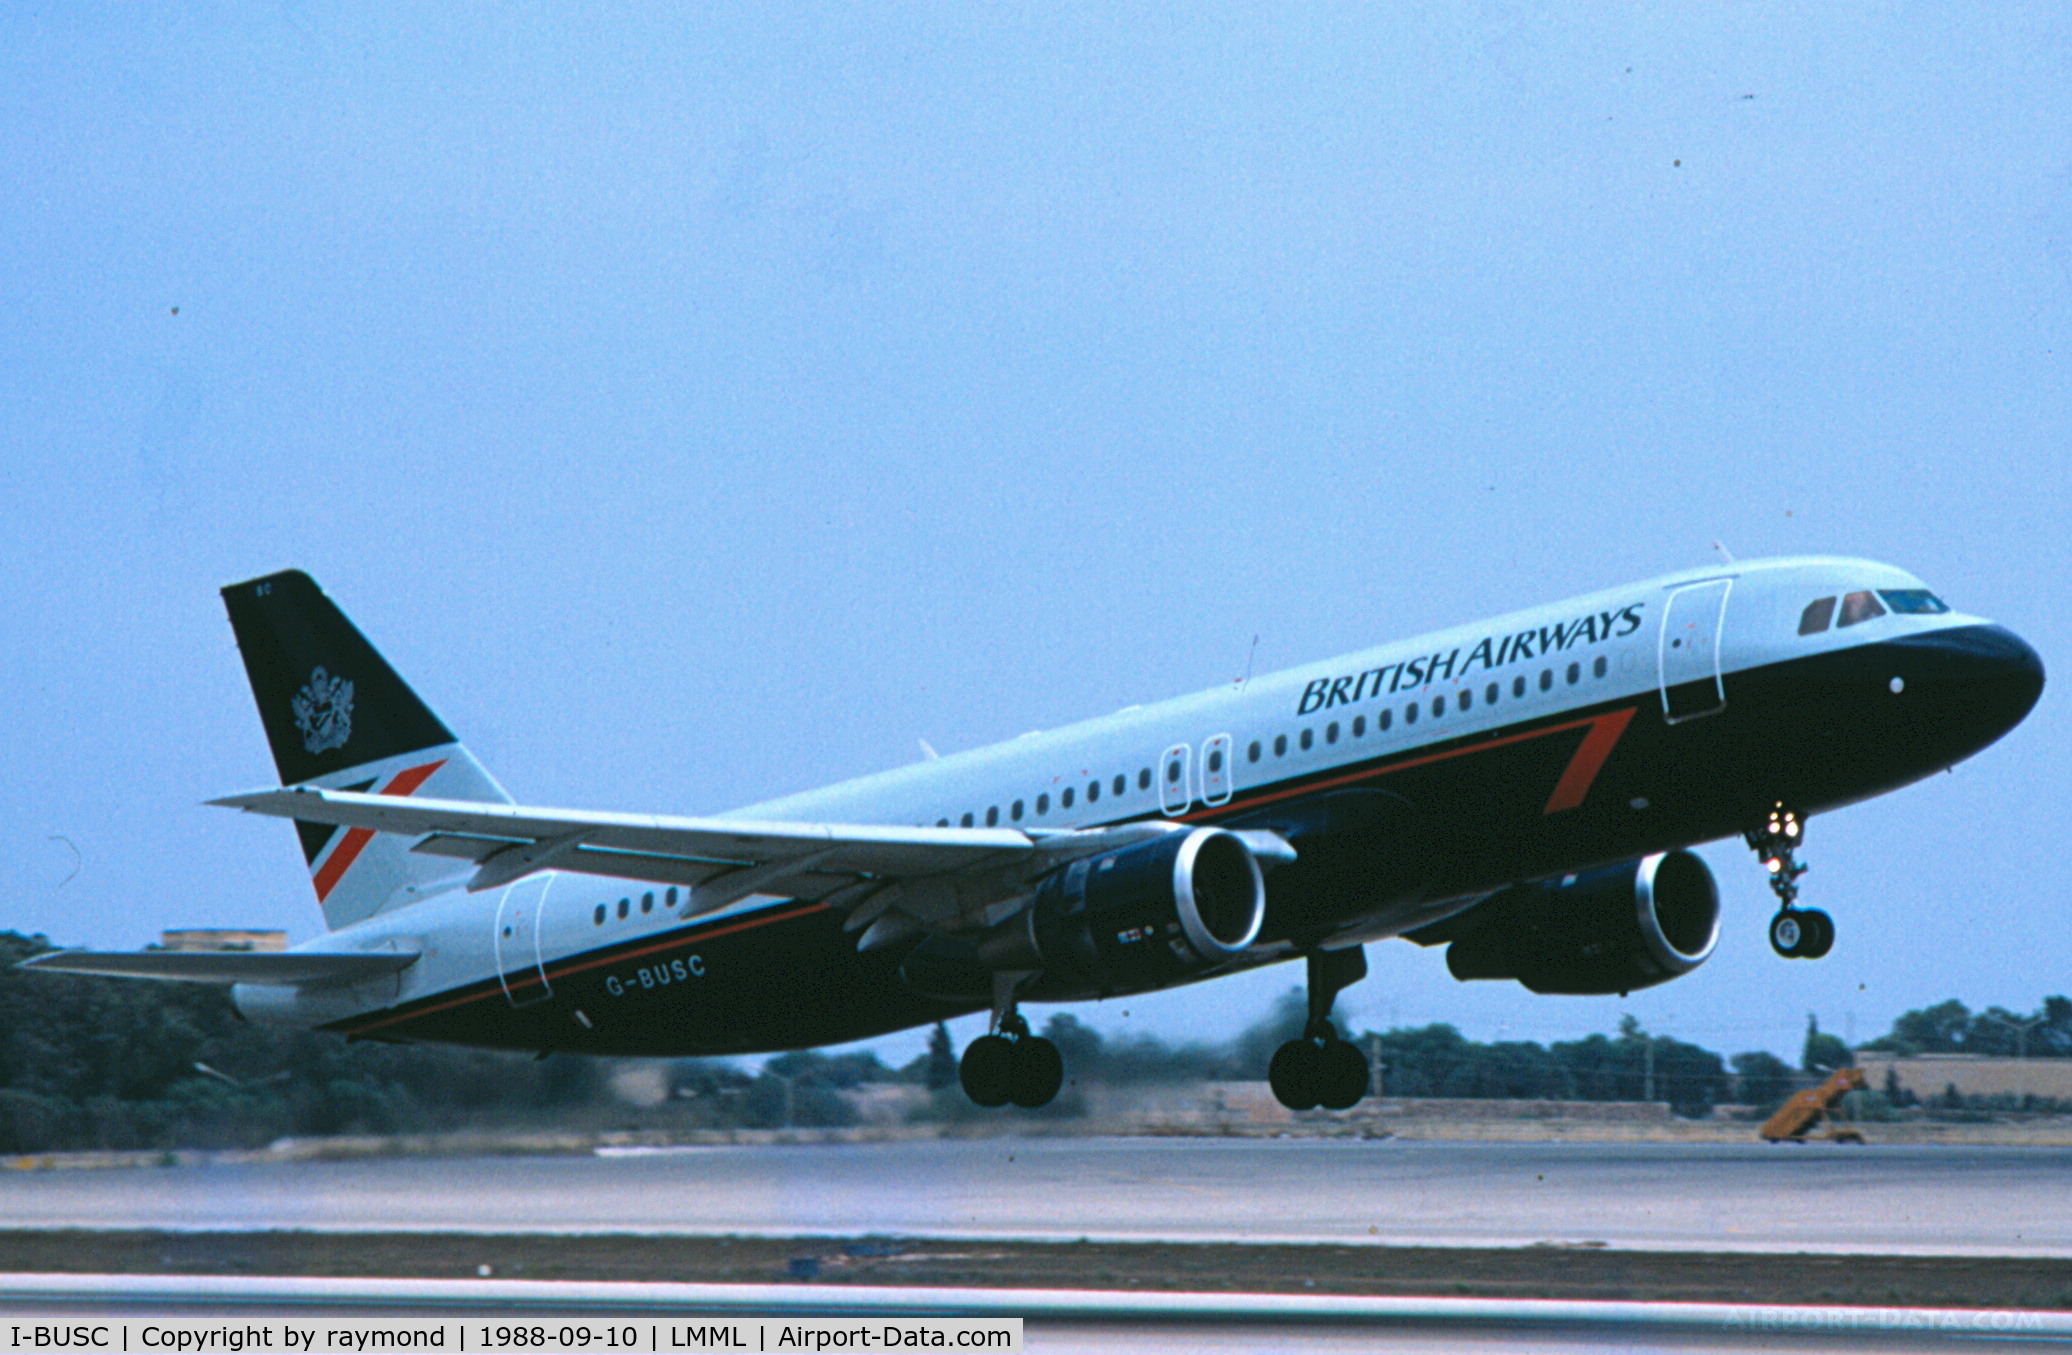 I-BUSC, 1980 Airbus A300B4-203 C/N 106, A320 G-BUSC British Airways